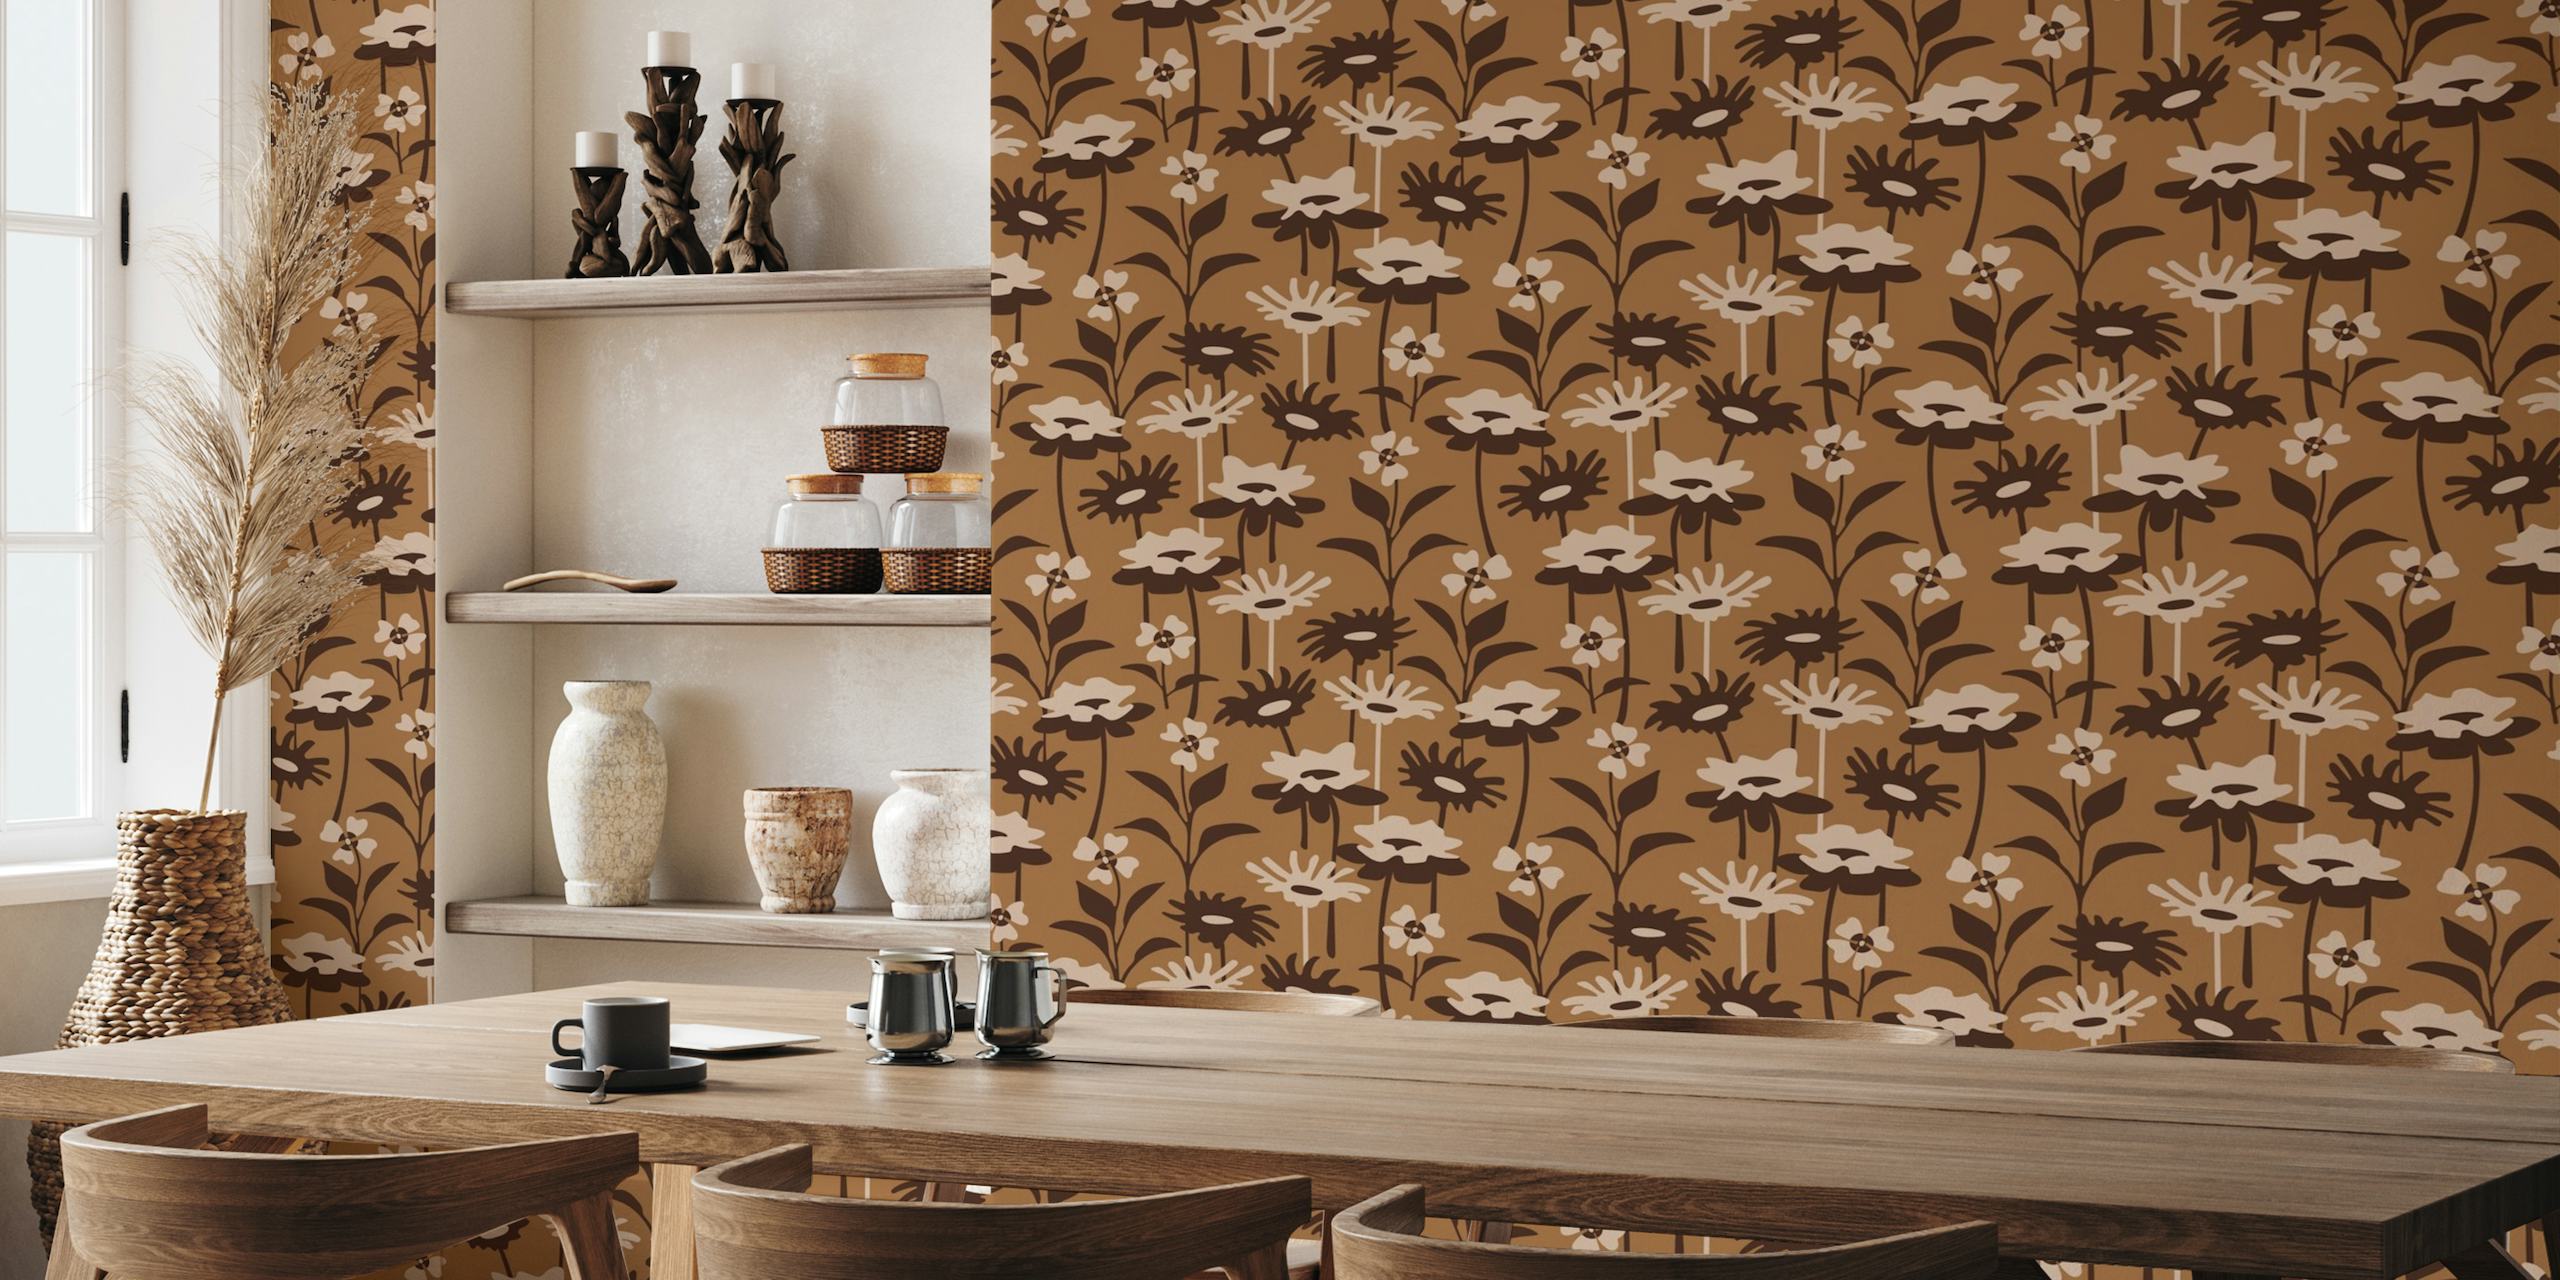 GARDEN MEADOW Retro Floral - Brown Earth Tone wallpaper